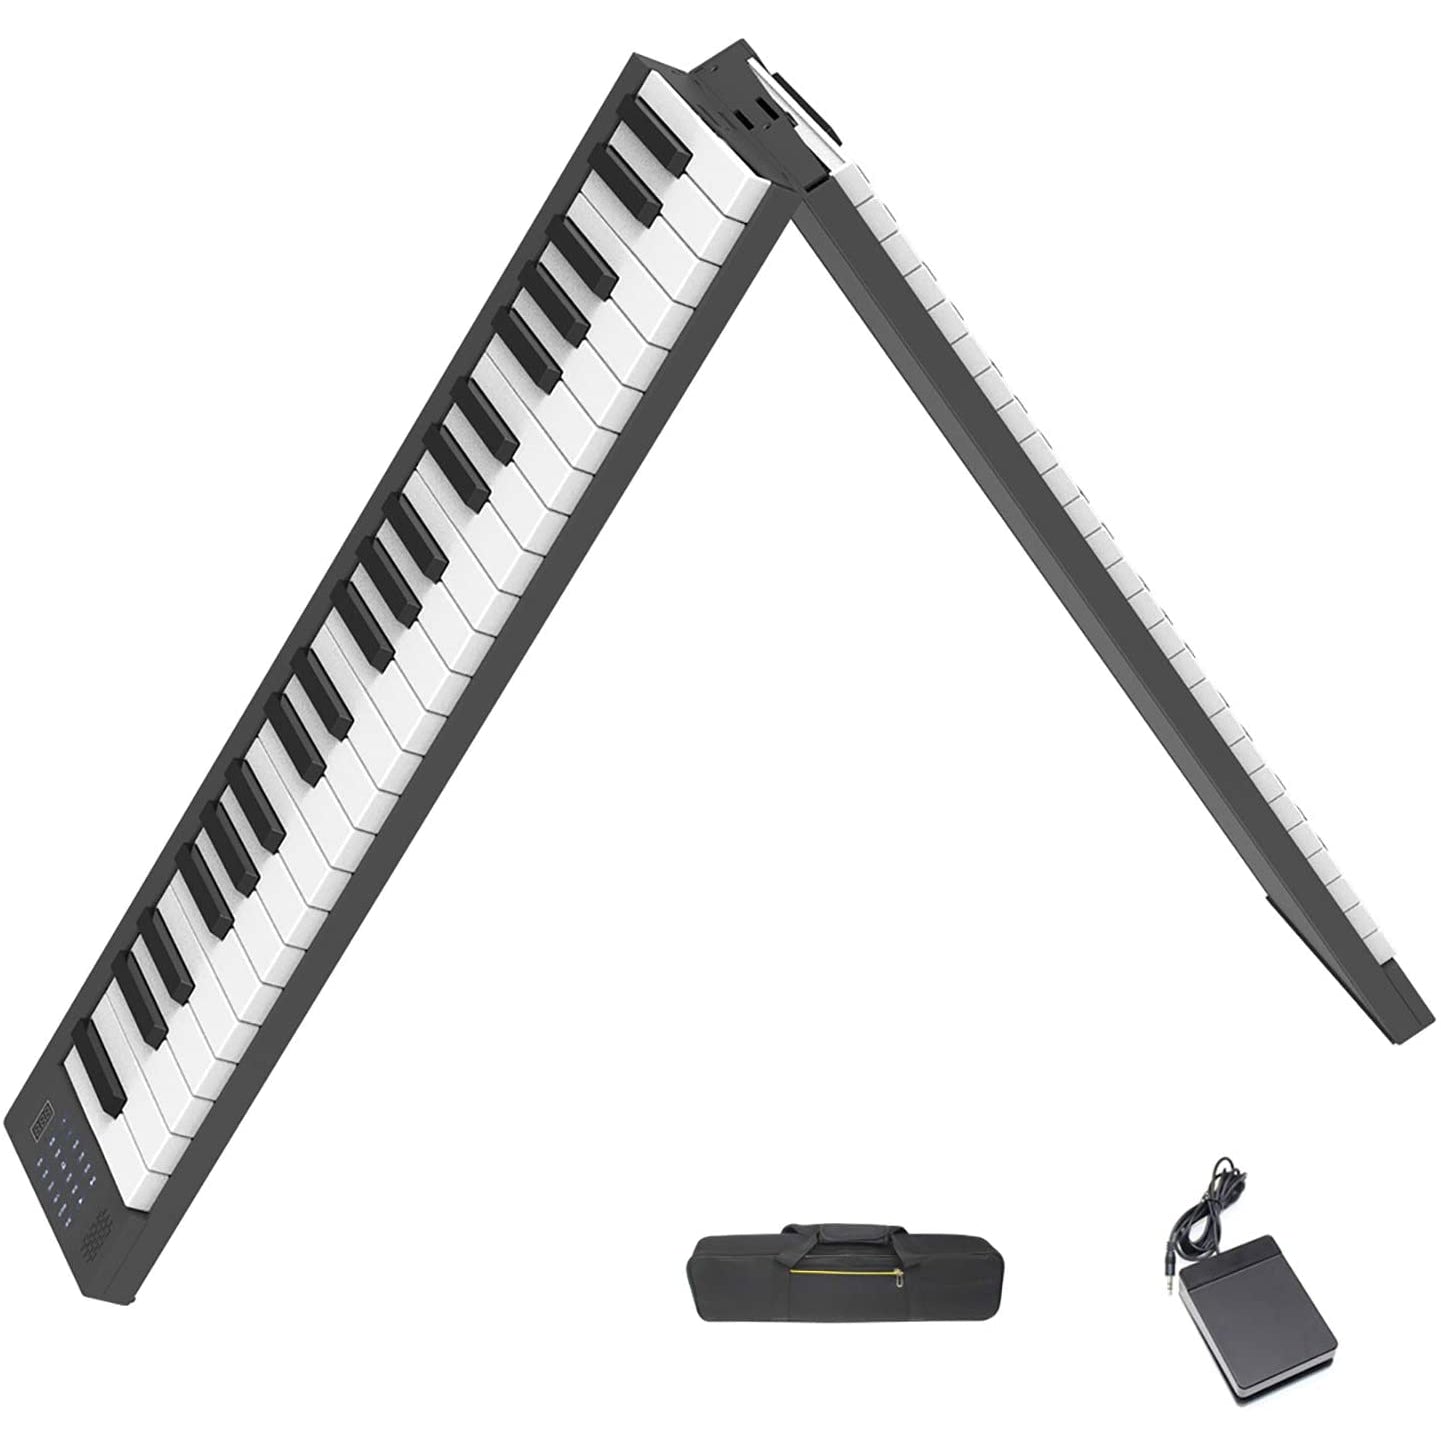 Folding Piano Keyboard 88 Keys Portable Foldable Lightweight